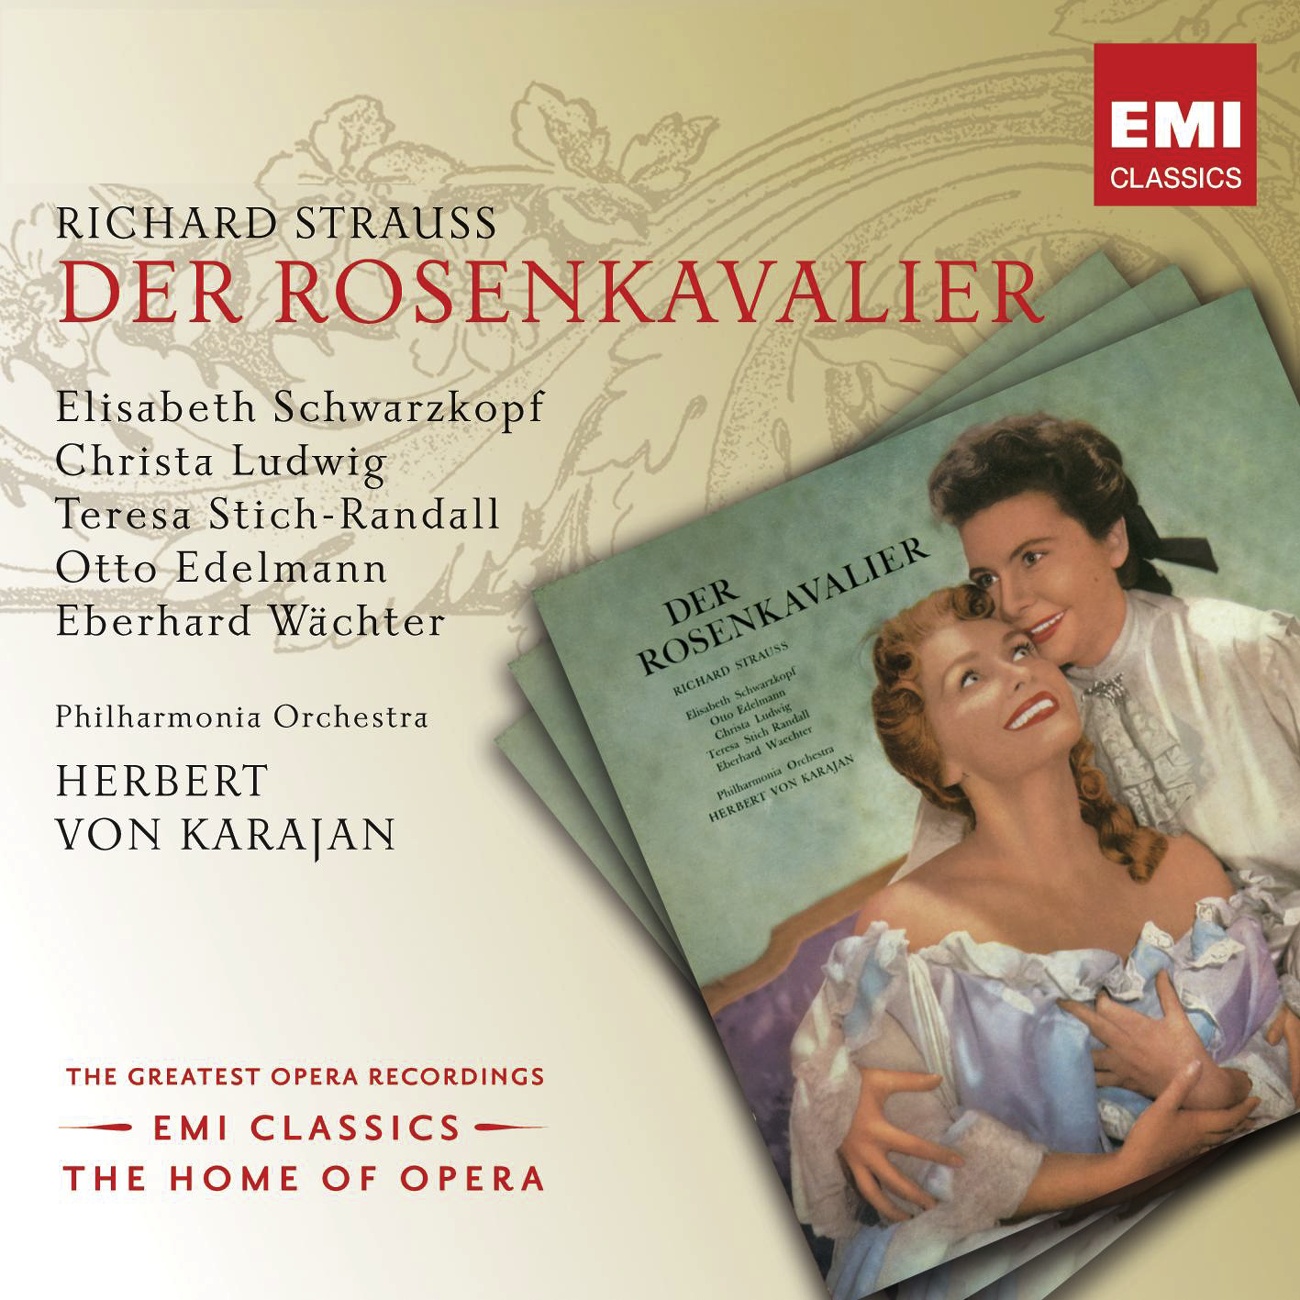 Der Rosenkavalier (2001 Digital Remaster), Act I: Introduction (Orchestra)